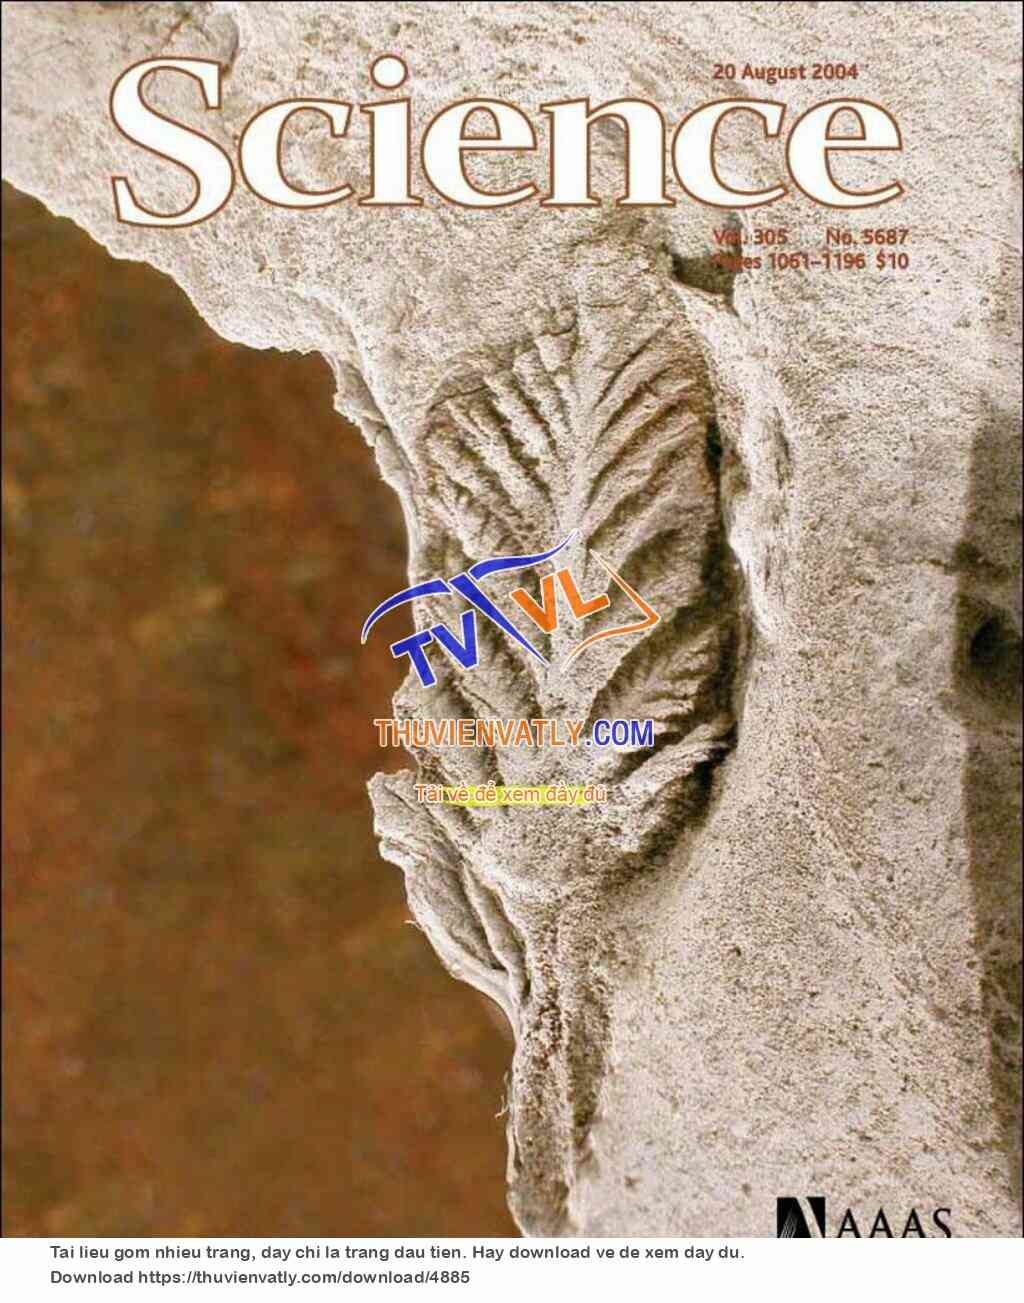 Science Magazine_20-08-2004